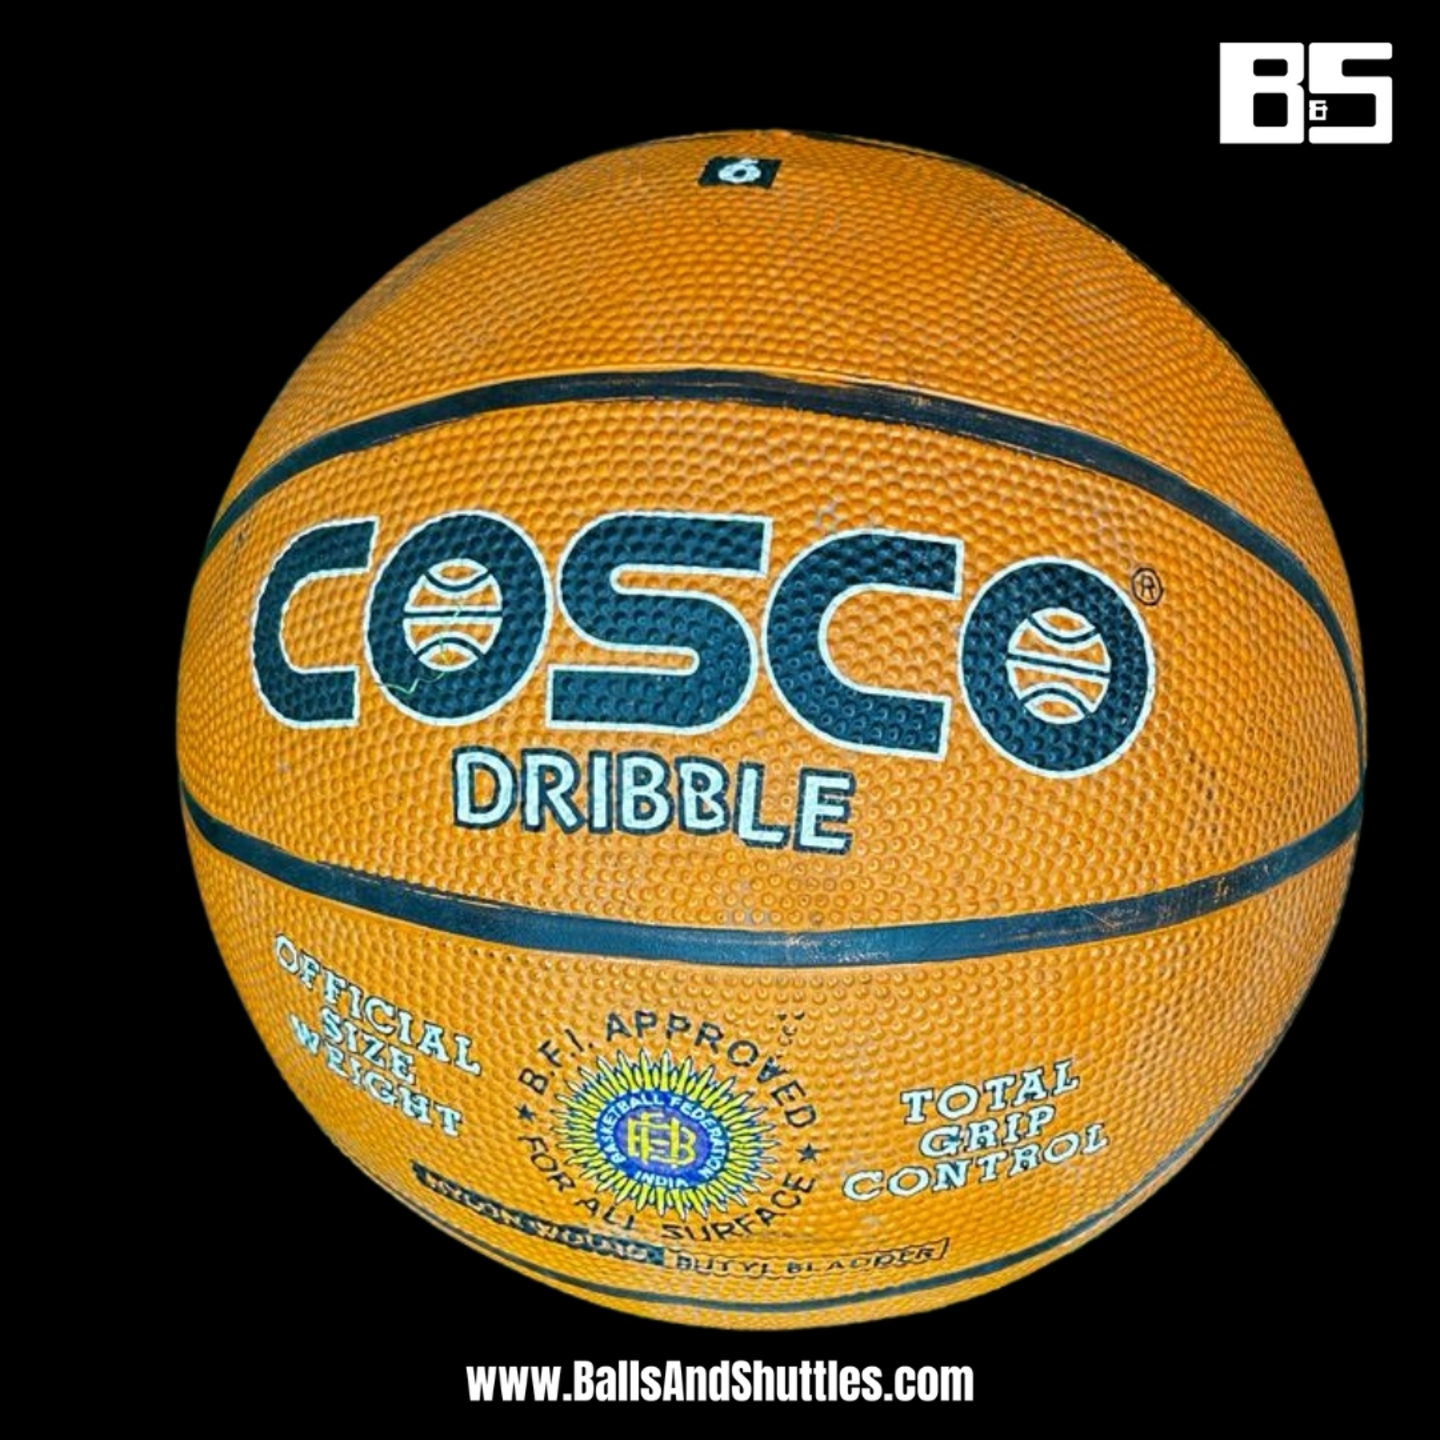 USED COSCO DRIBBLE BASKETBALL | COSCO SIZE 6 BASKETBALL | COSCO BASKETBALL